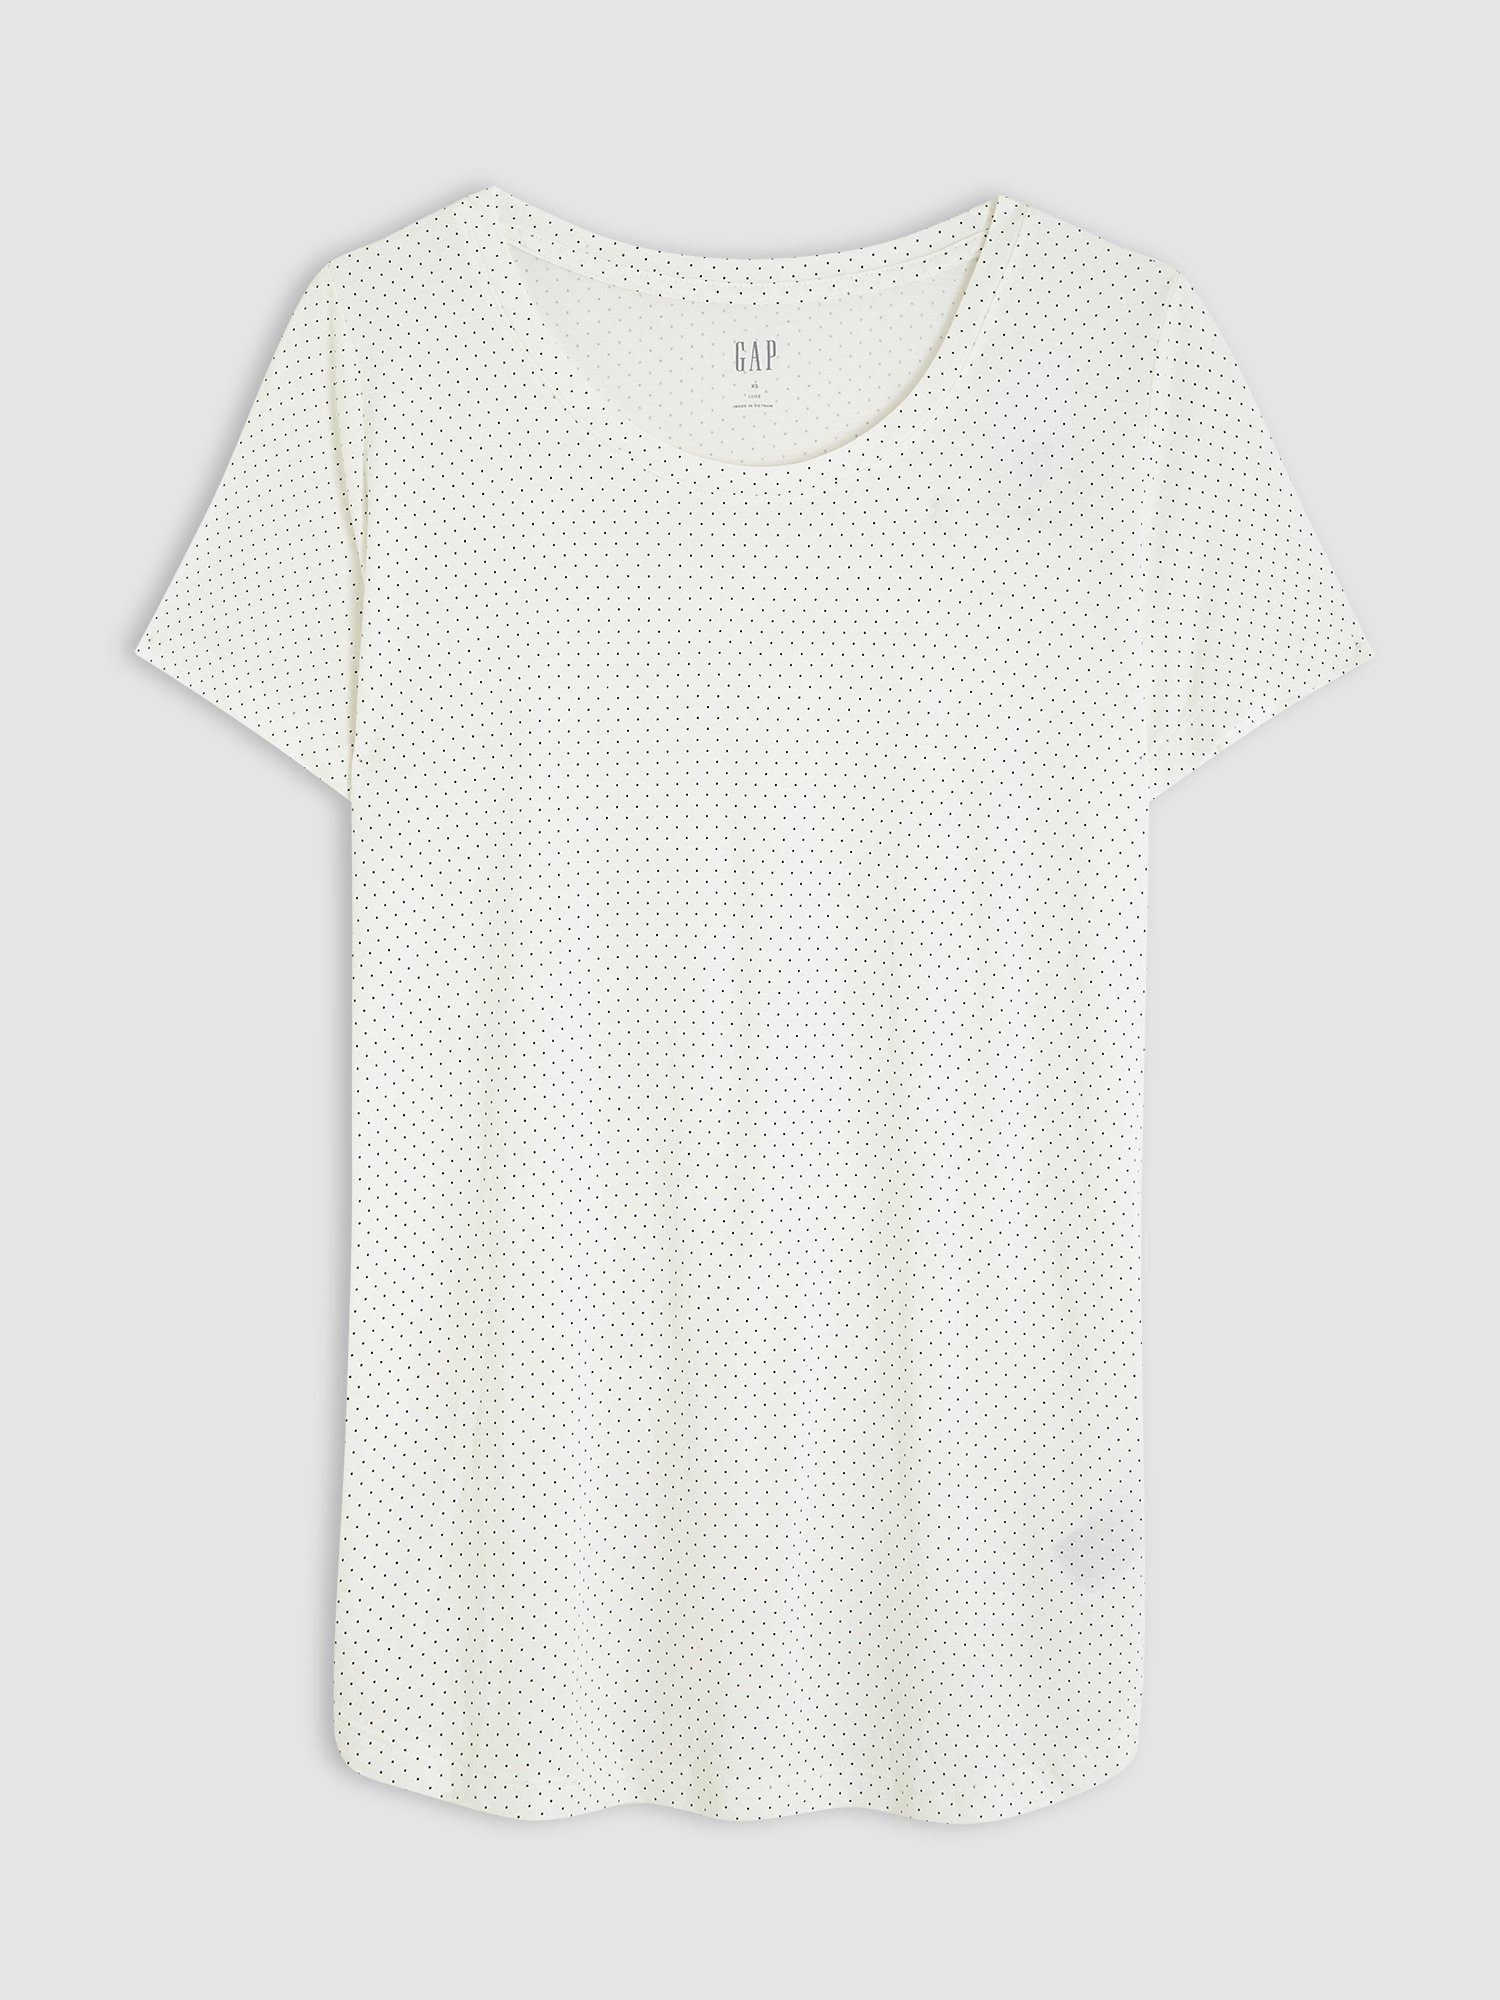 Luxe Kısa Kollu T-Shirt product image